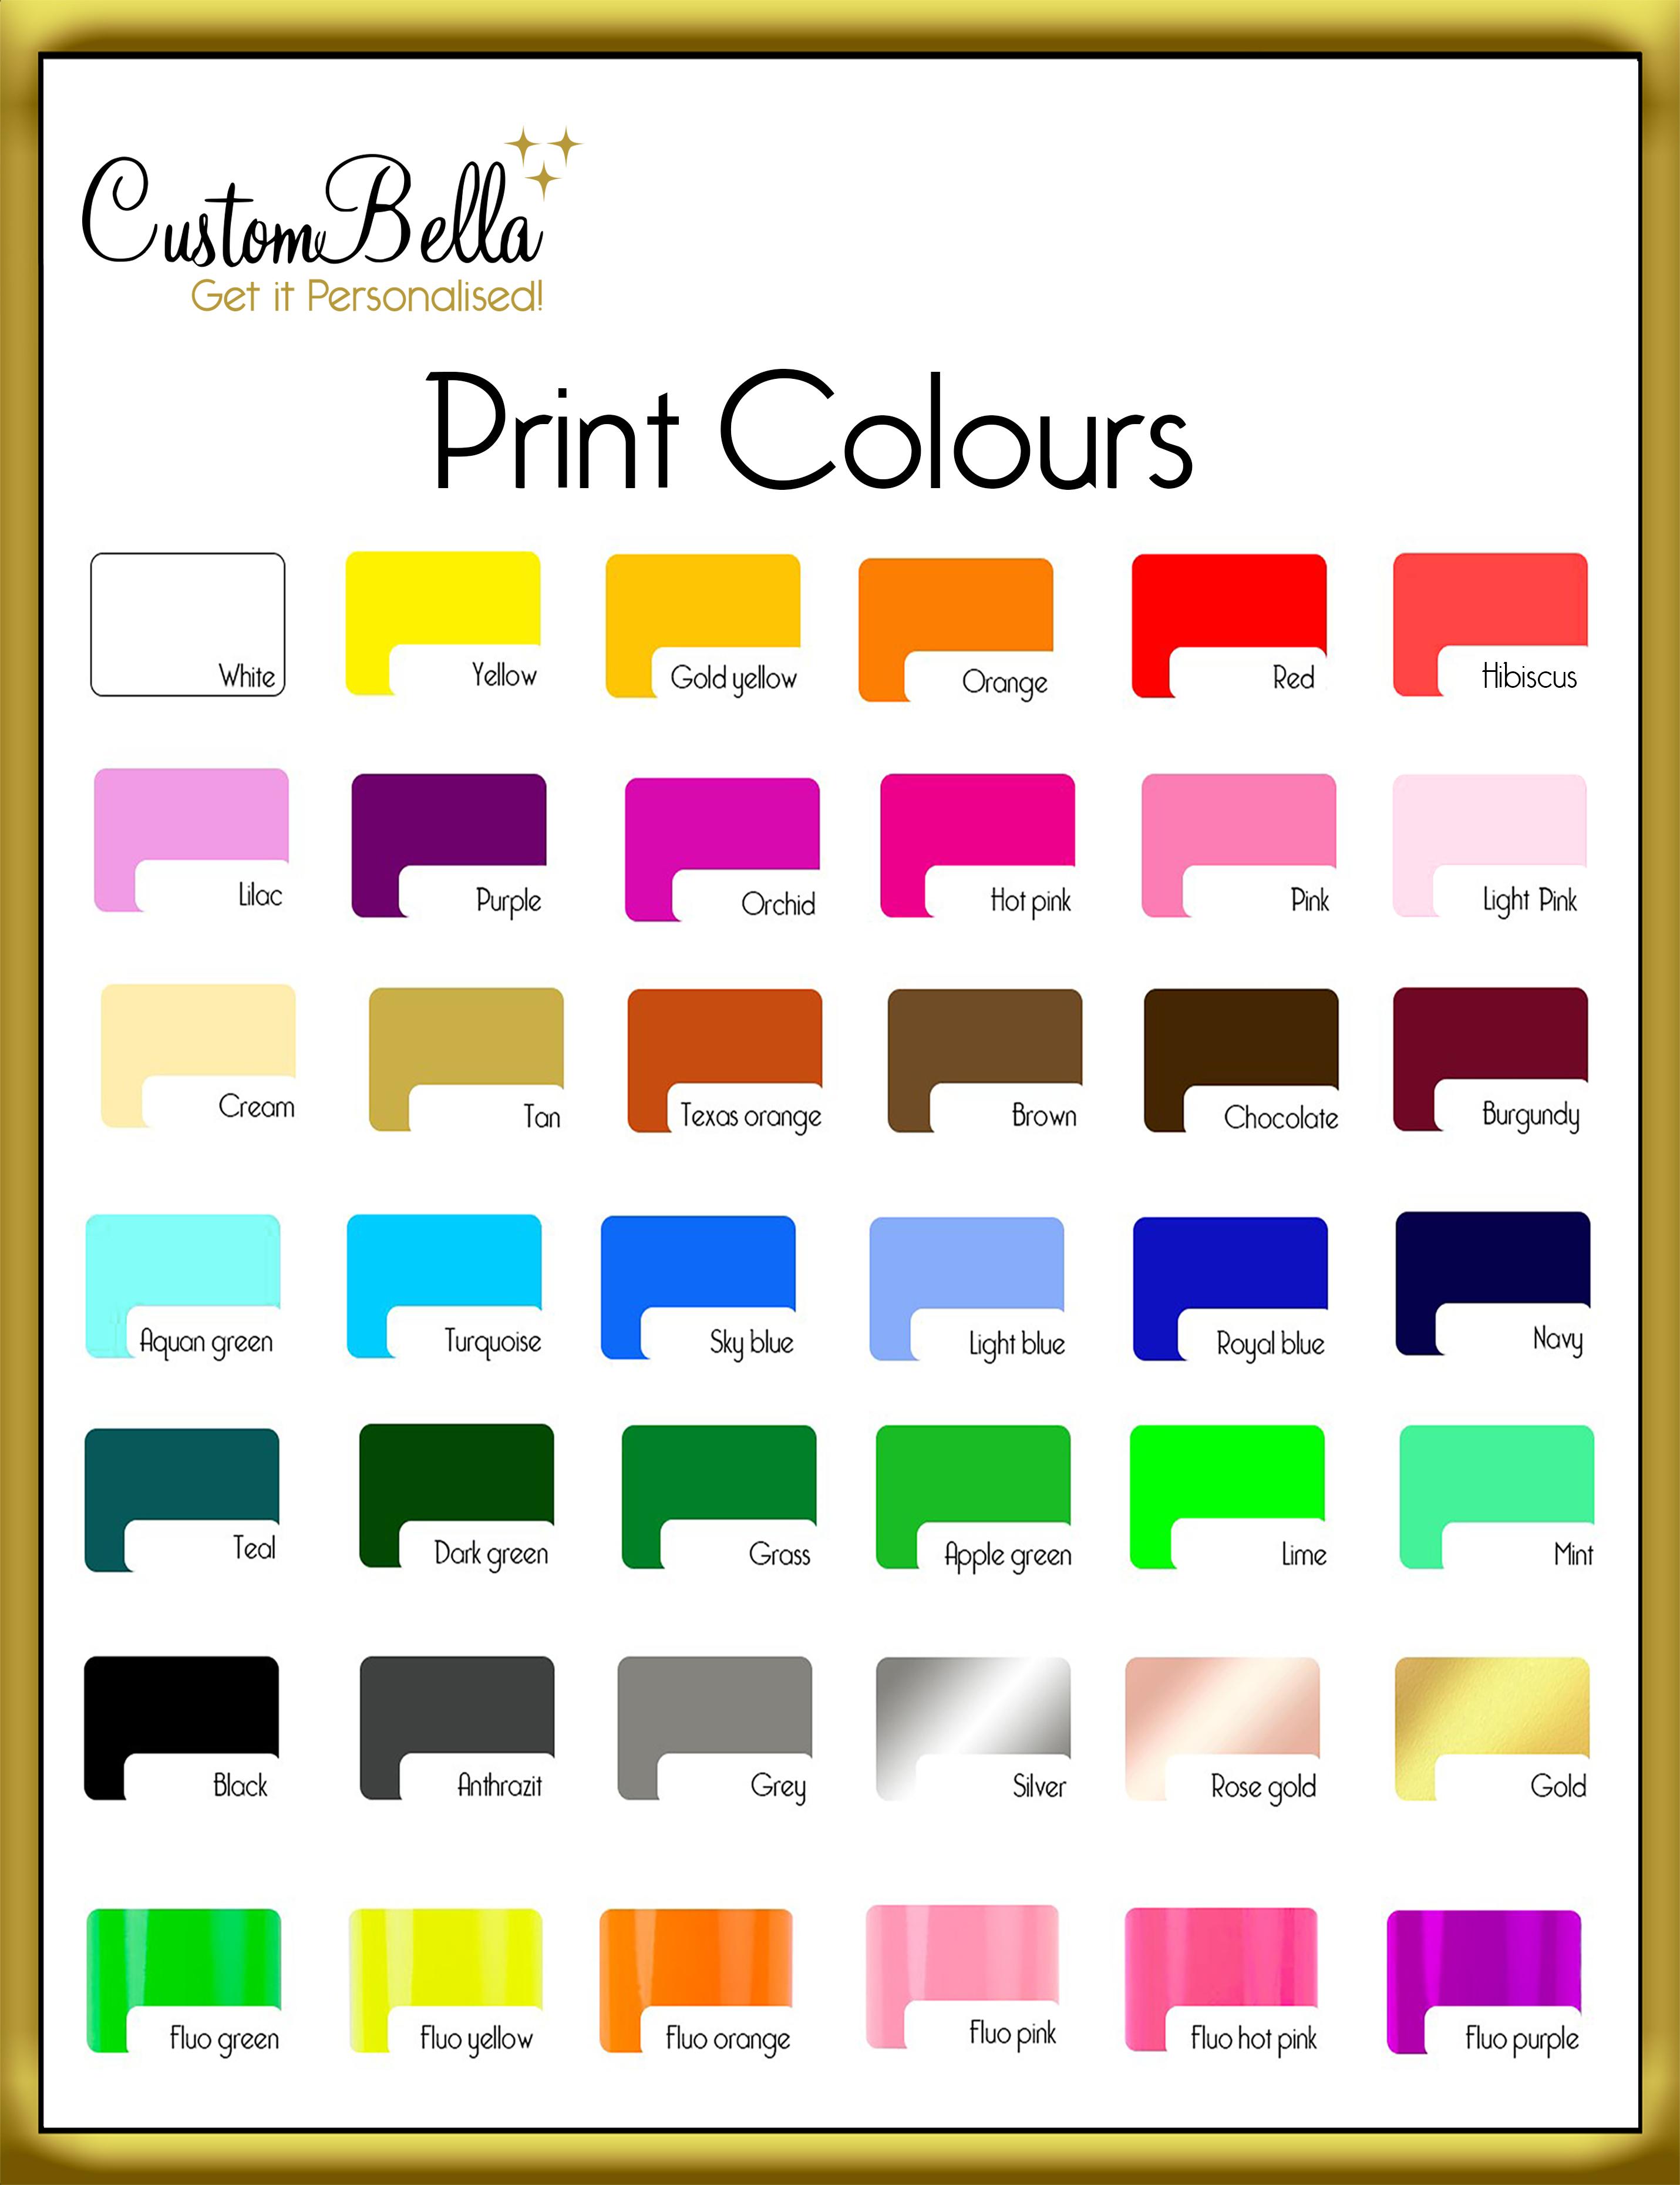 Custombella 42 standard print colours